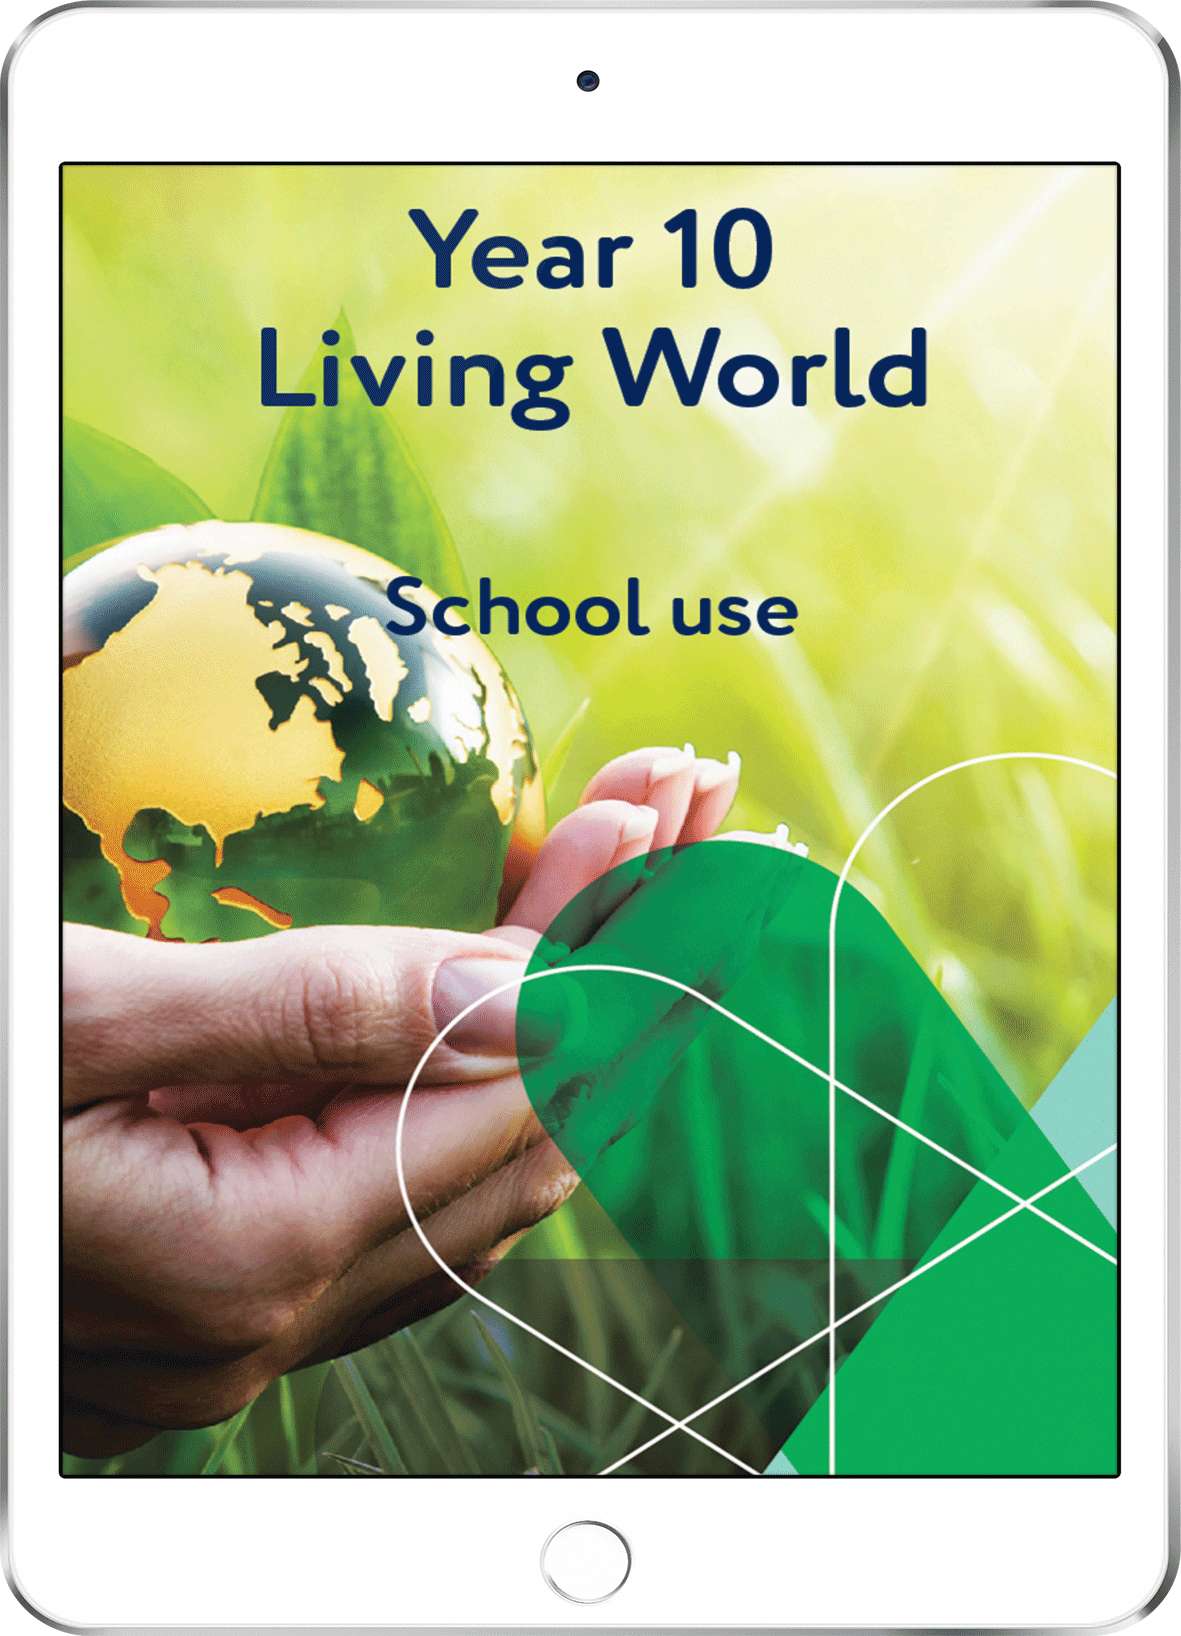 Year 10 Living World - School Use